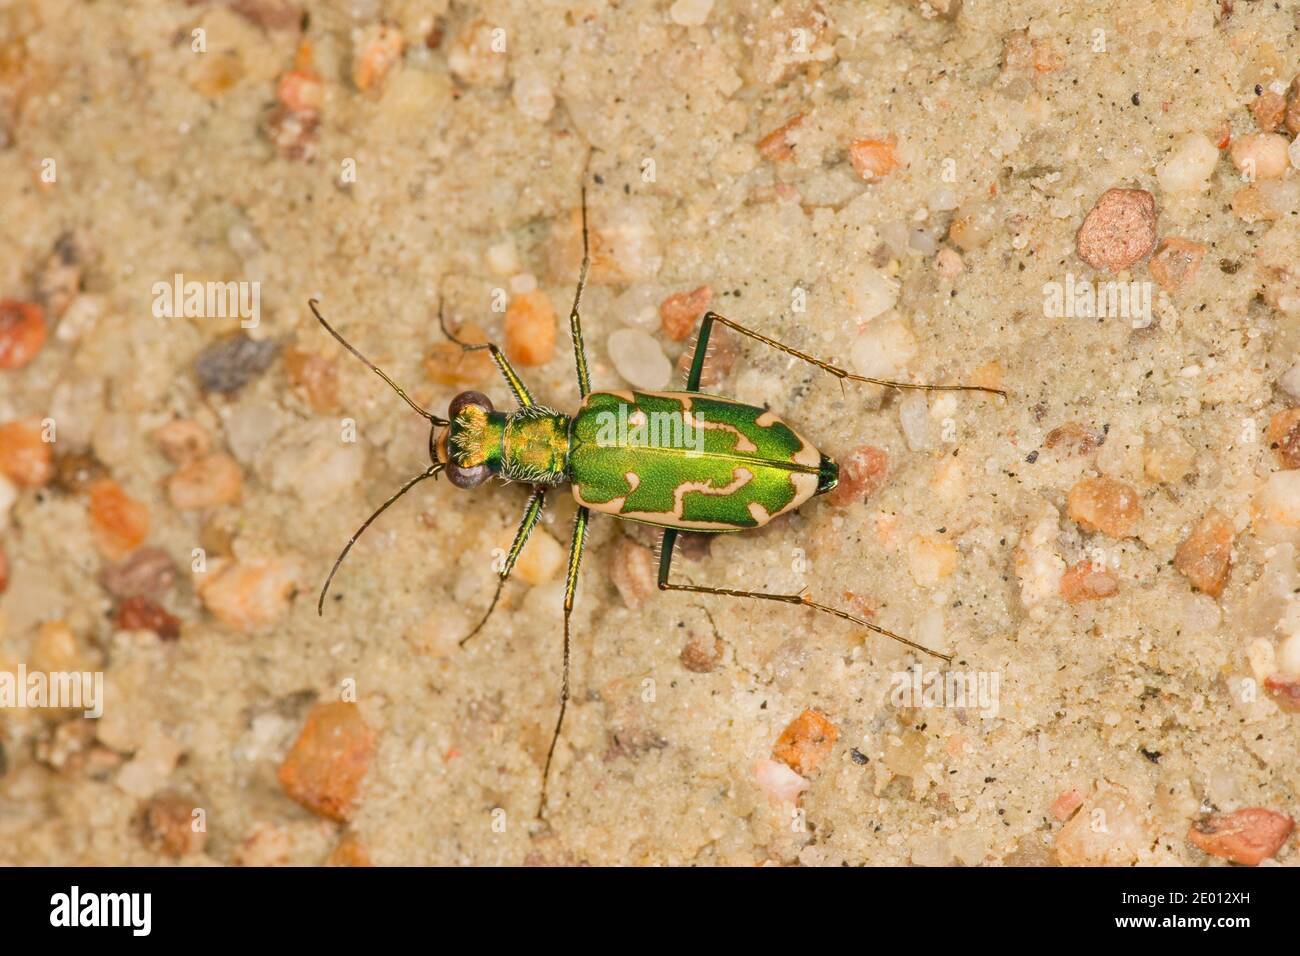 Aridland Tiger Beetle, Ellipsoptera marutha, Cicindelinae, Carabidae. Lunghezza 13.5 mm. Morph verde. Foto Stock